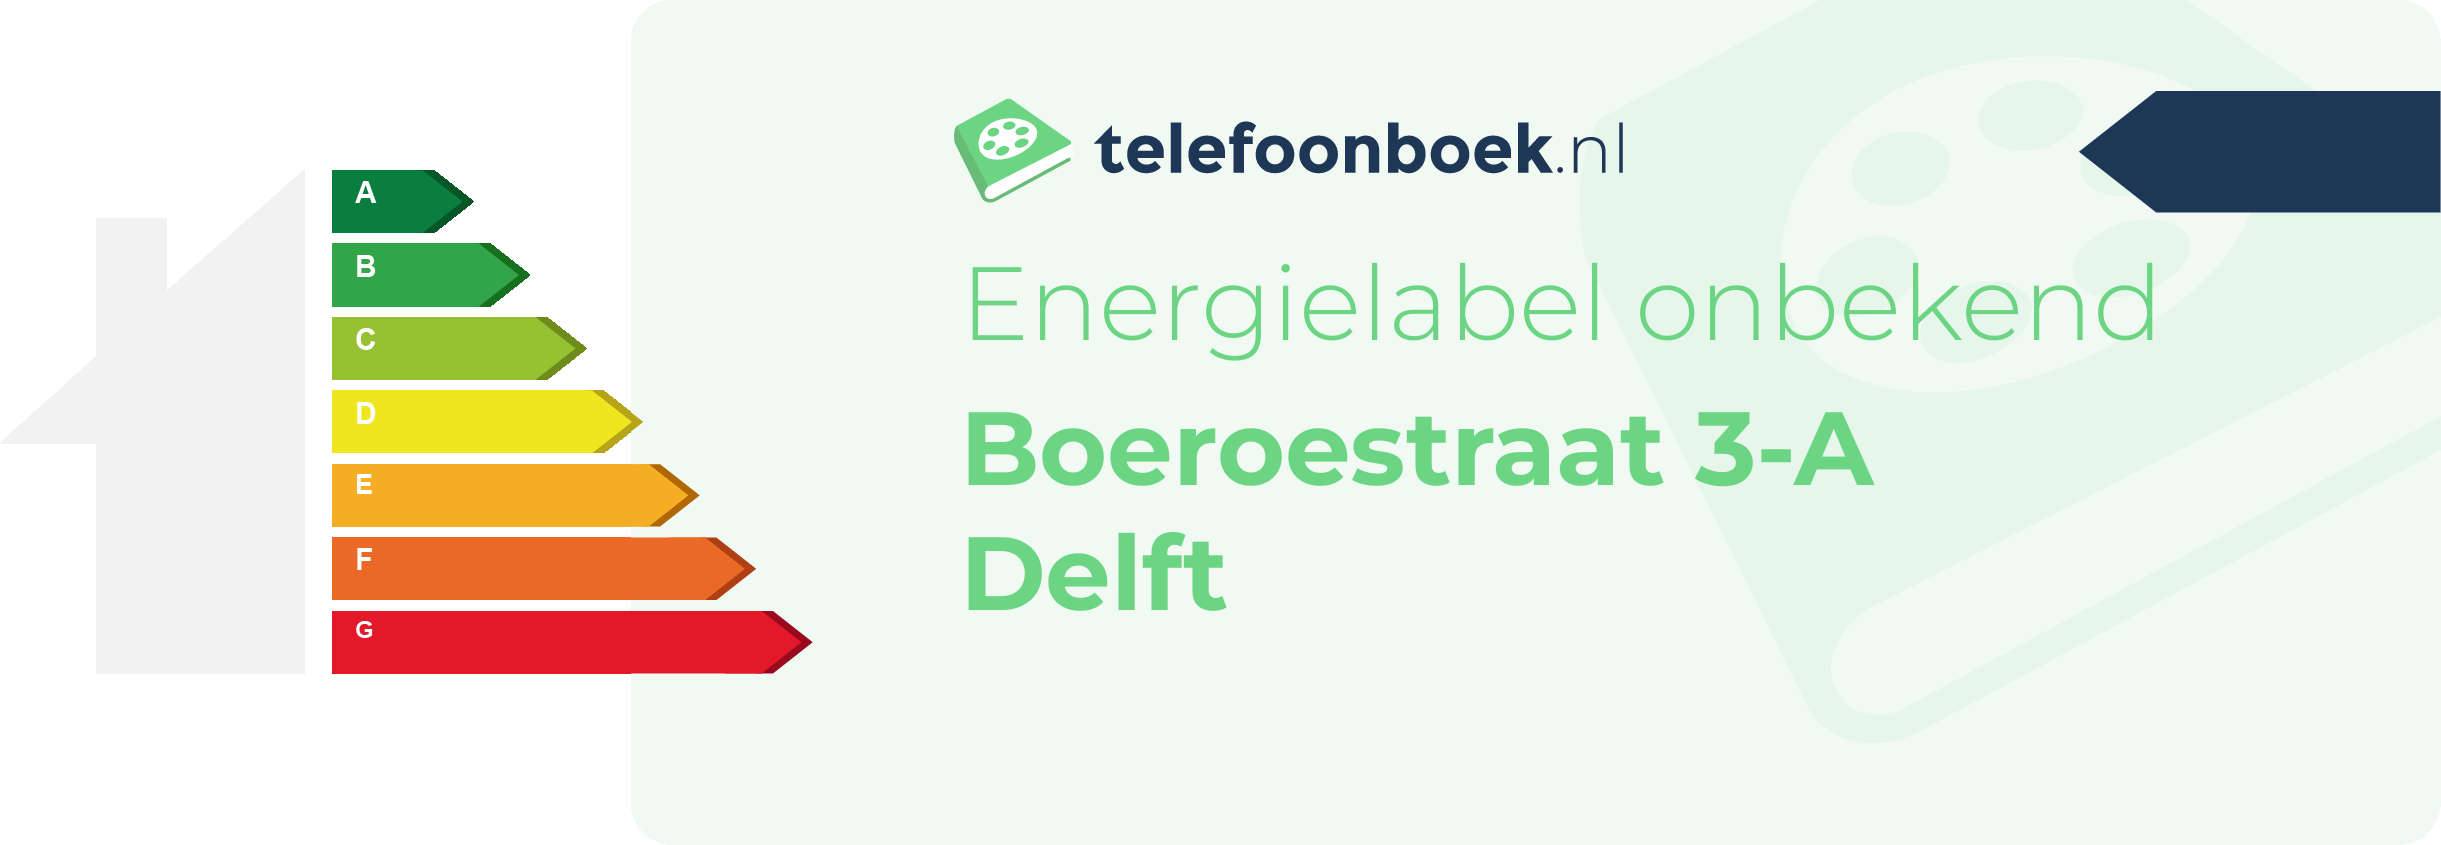 Energielabel Boeroestraat 3-A Delft